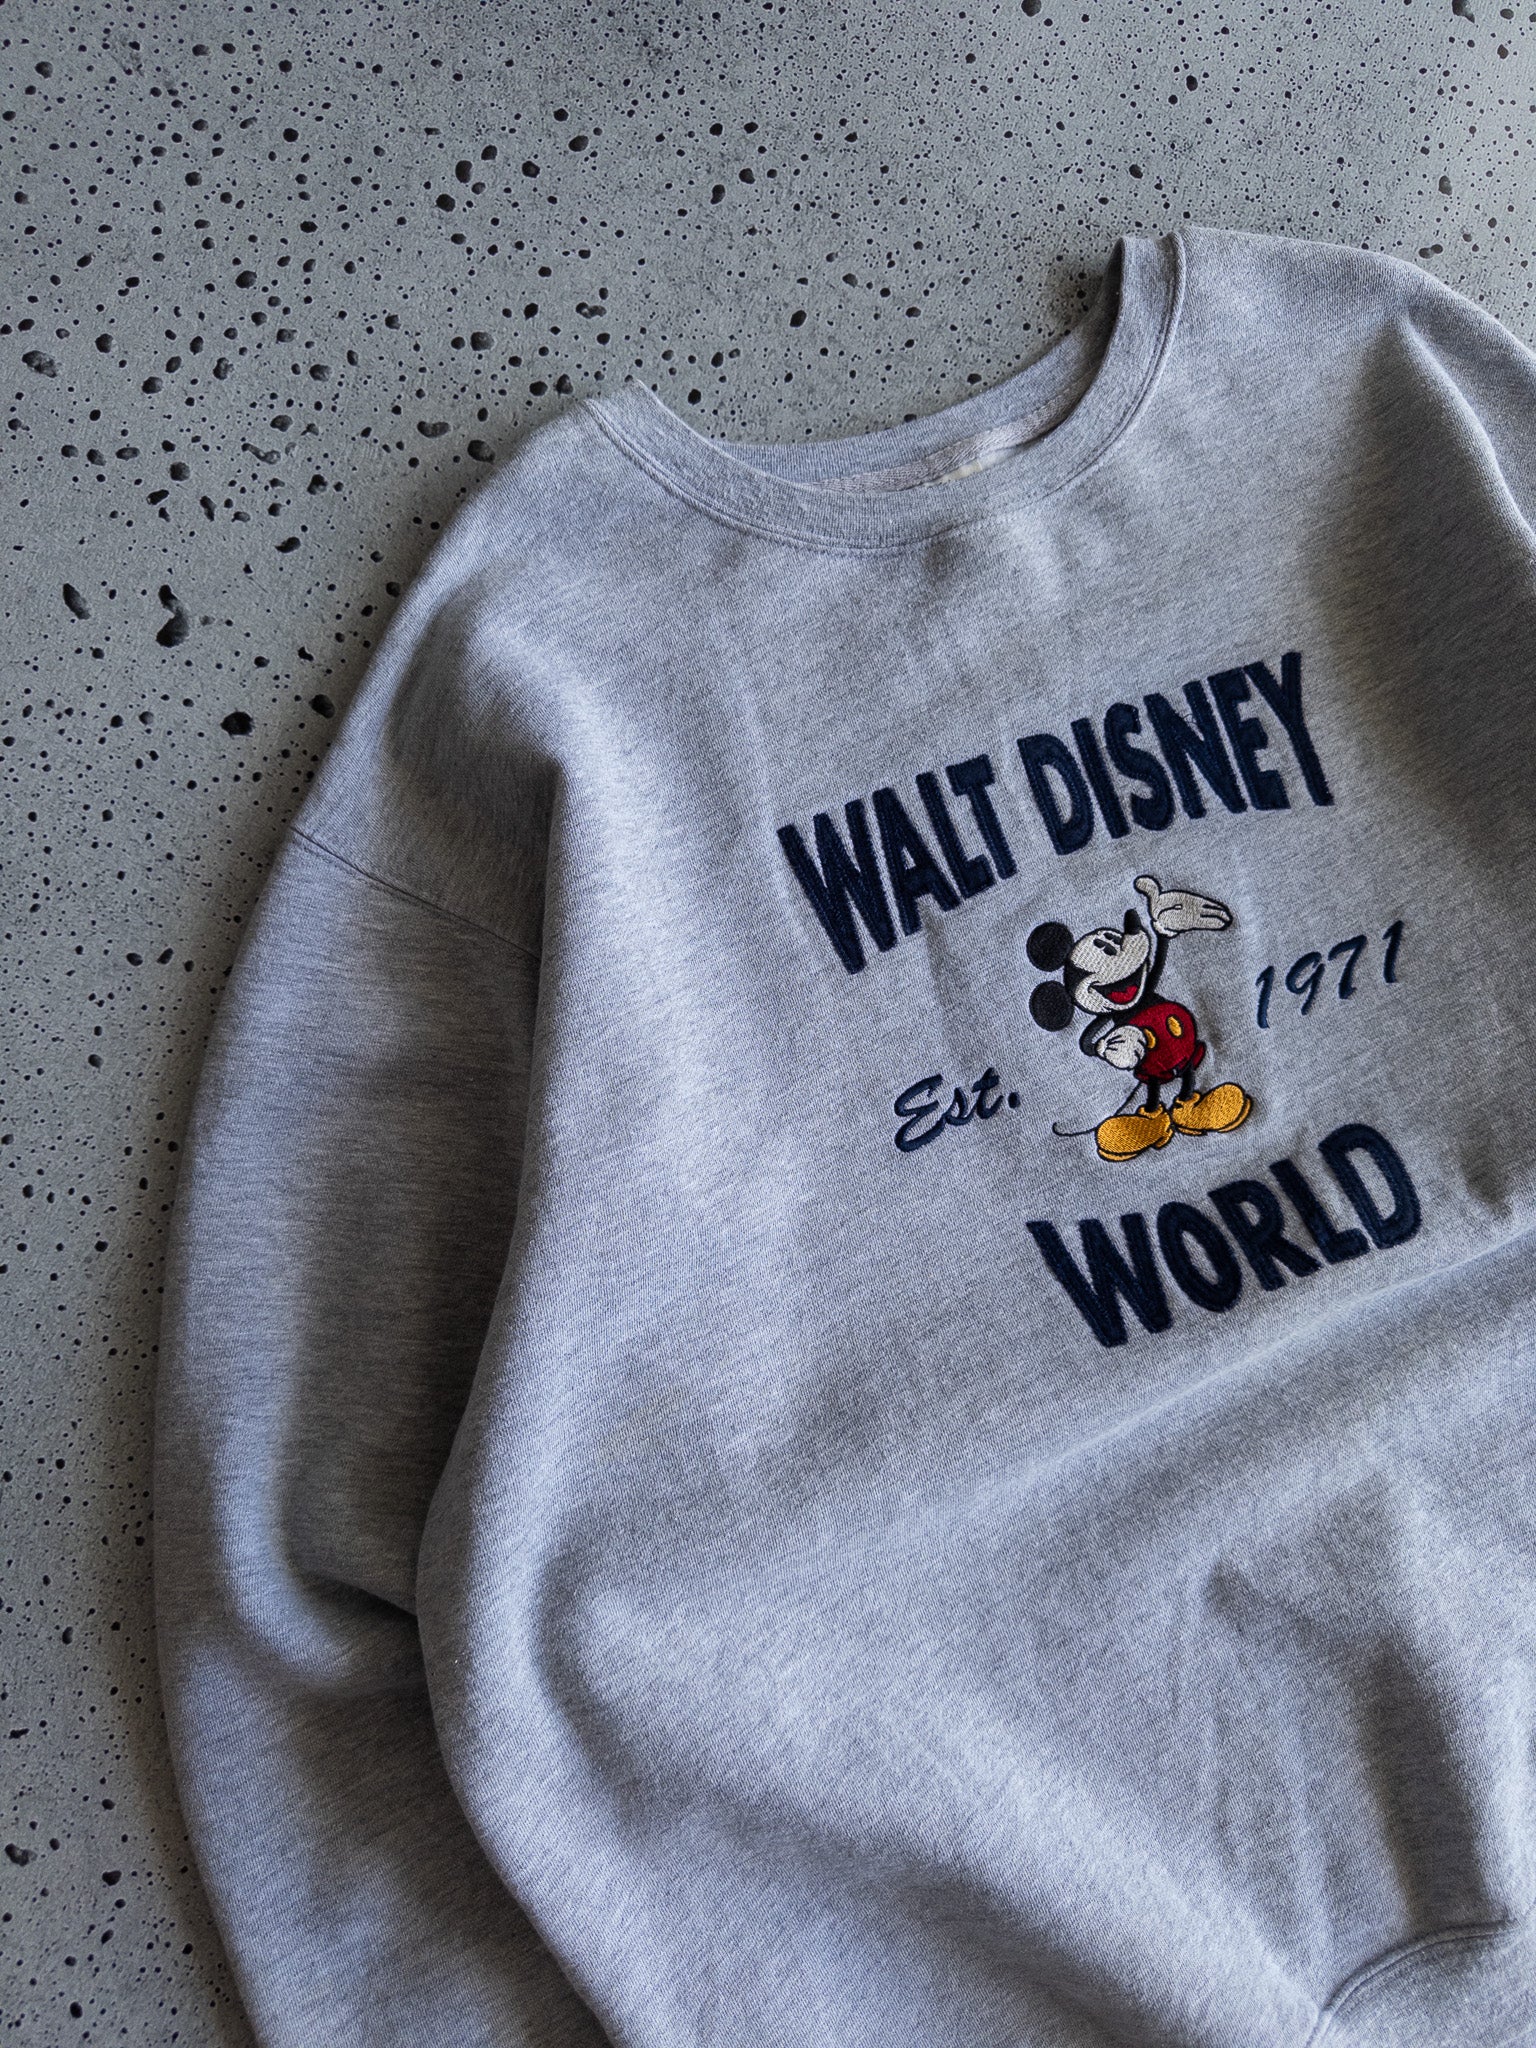 Vintage Walt Disney Sweatshirt (XL)